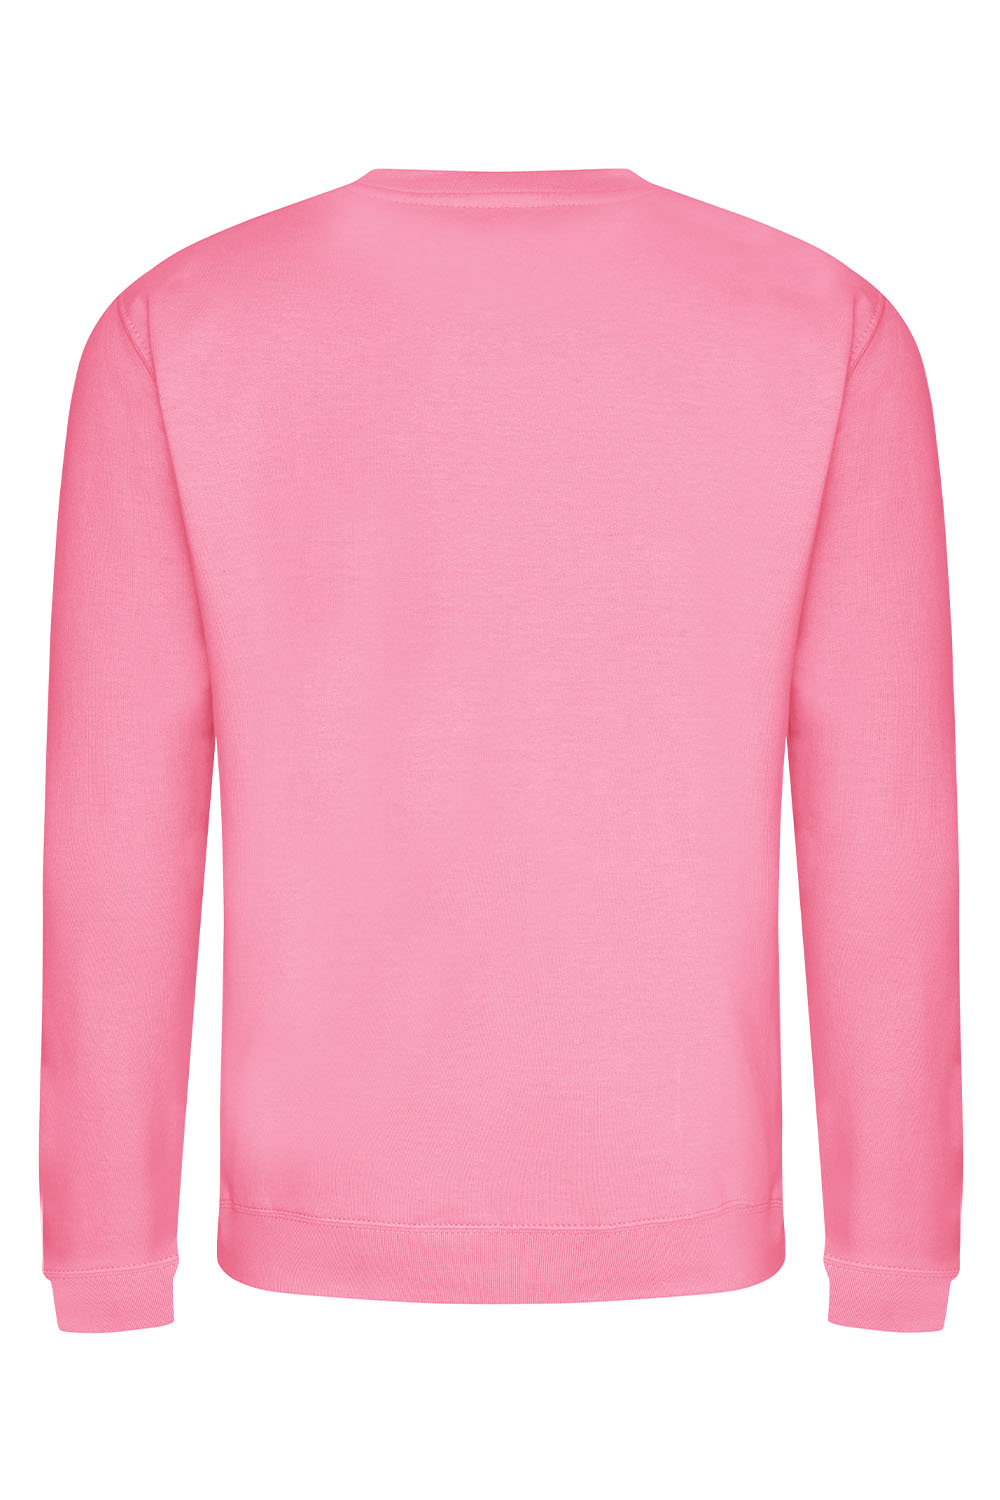 LA Sweatshirt In Candy Floss Pink (Custom Packs)